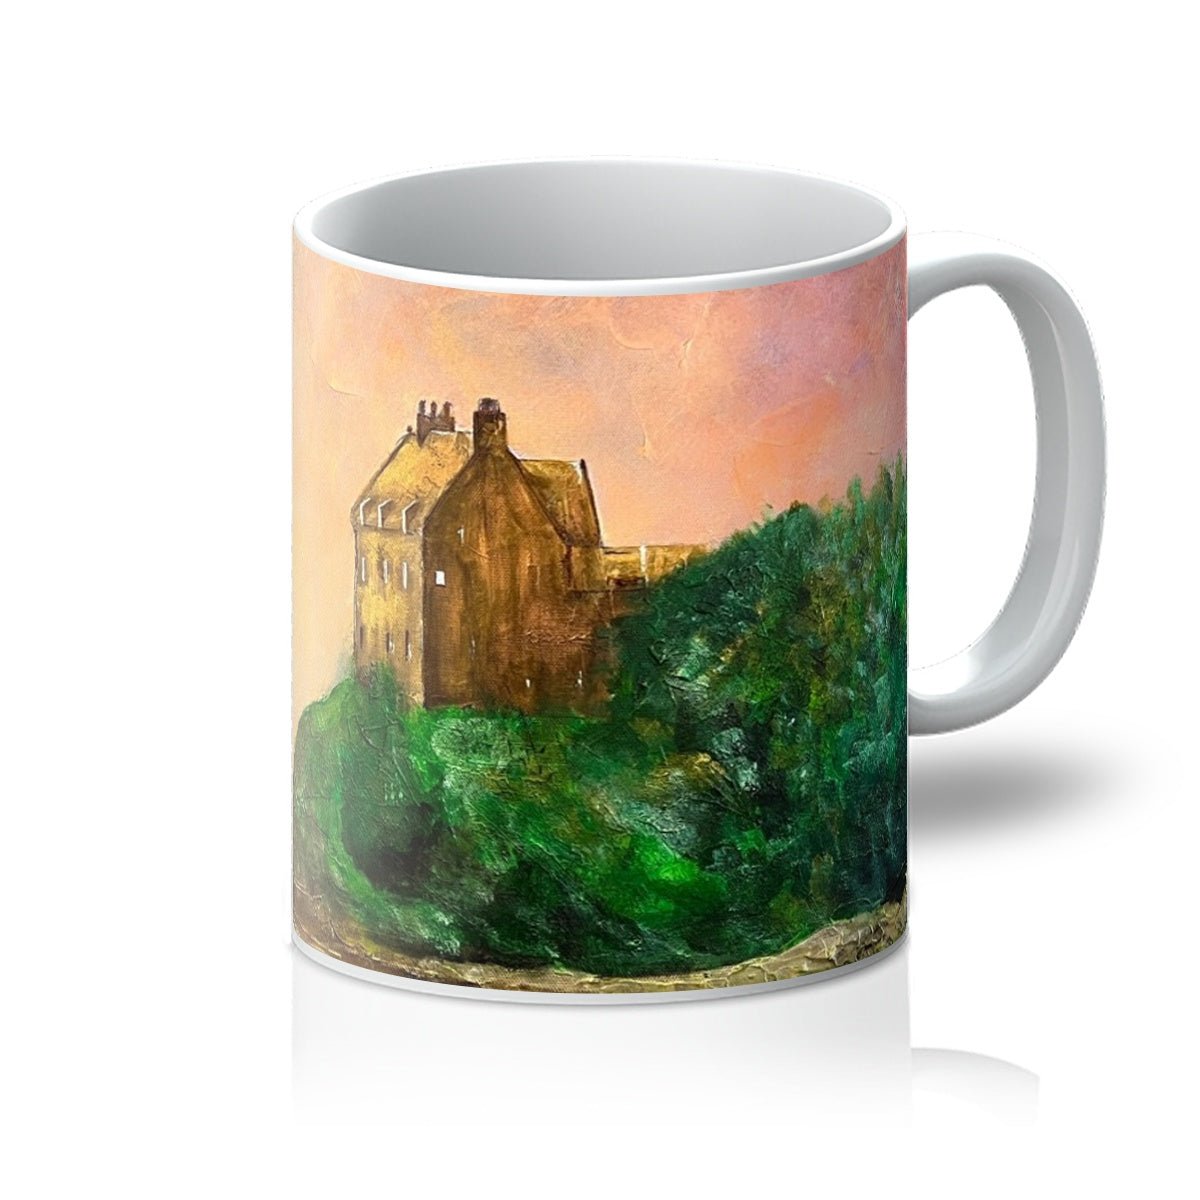 Duntrune Castle Art Gifts Mug-Mugs-Scottish Castles Art Gallery-11oz-White-Paintings, Prints, Homeware, Art Gifts From Scotland By Scottish Artist Kevin Hunter